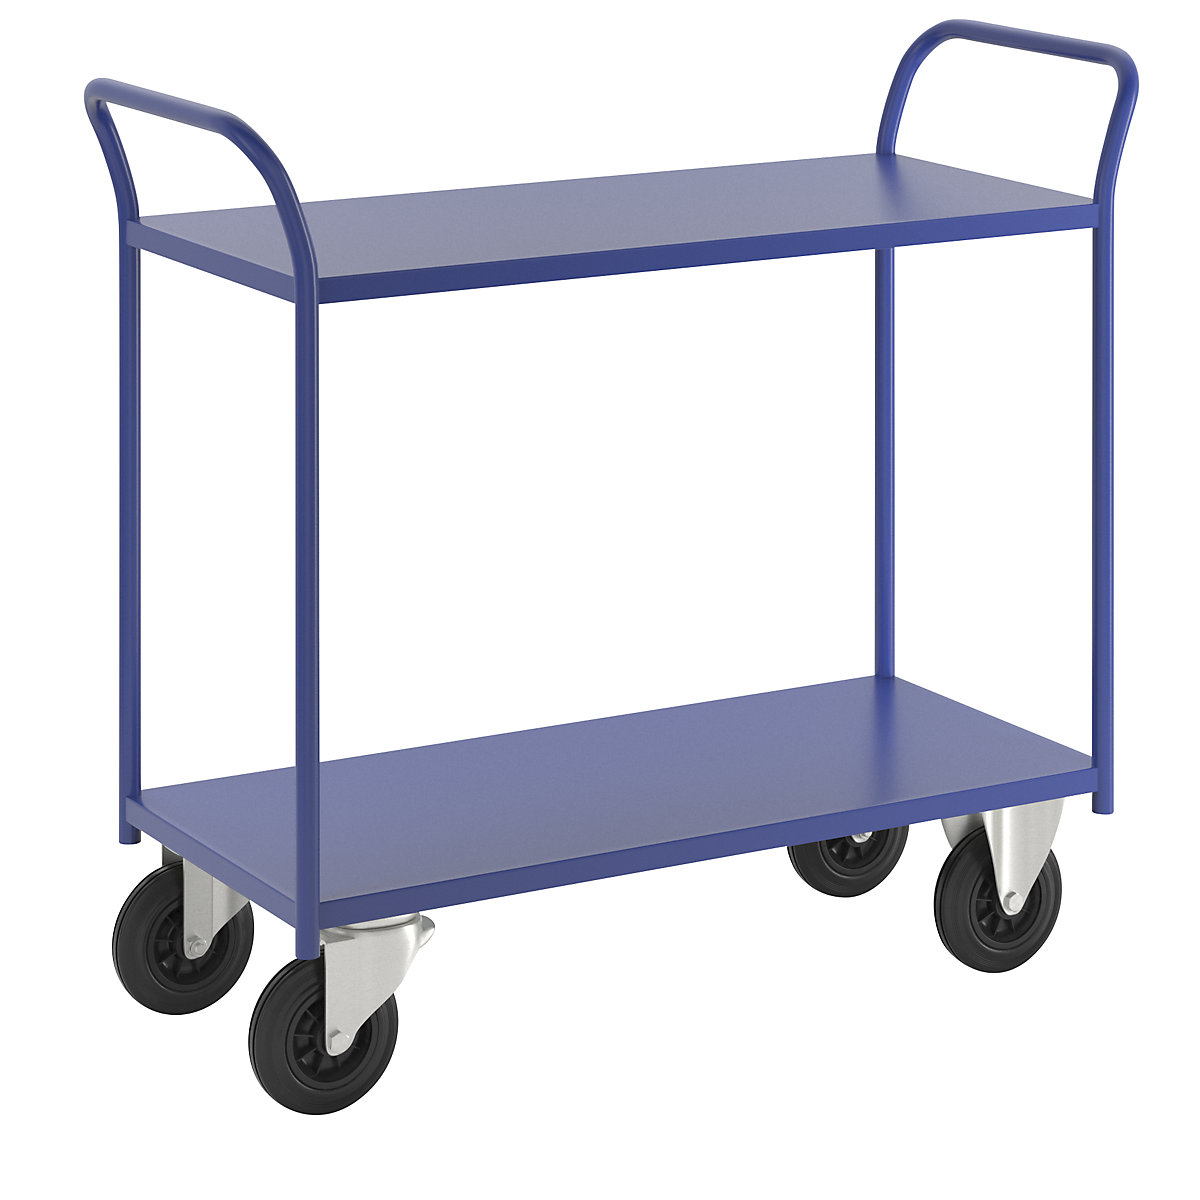 Stolový vozík KM41 – Kongamek, 2 etáže, d x š x v 1080 x 450 x 975 mm, modrá, 2 otočná a 2 pevná kola-8